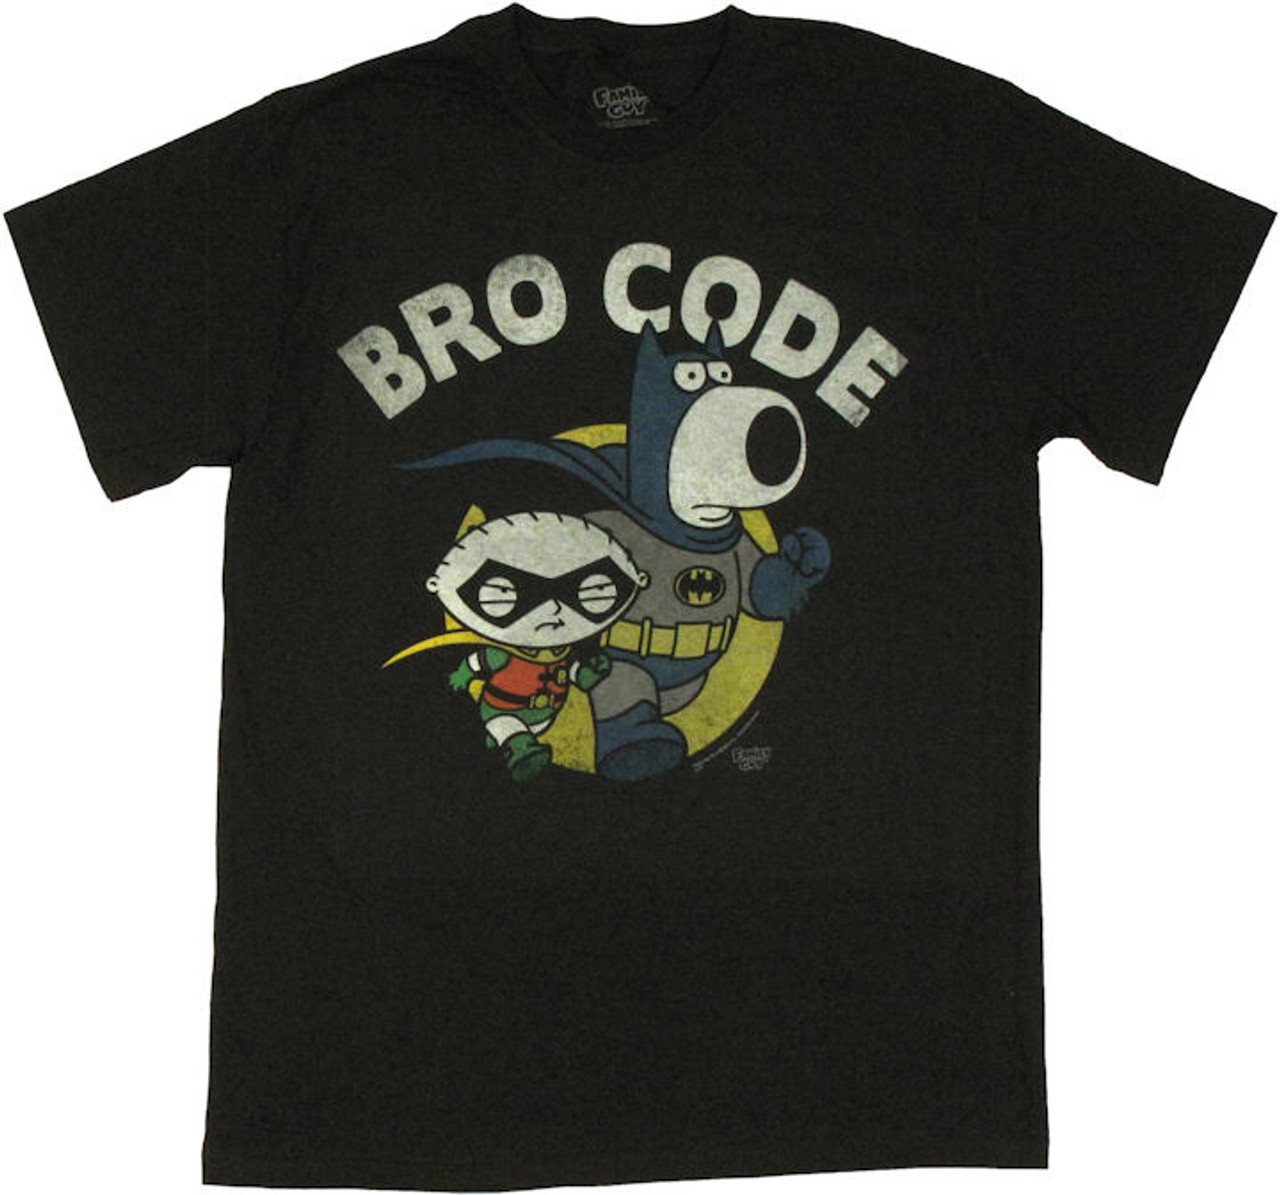 family guy dc bro code t shirt 3 53922.1 - Family Guy Shop